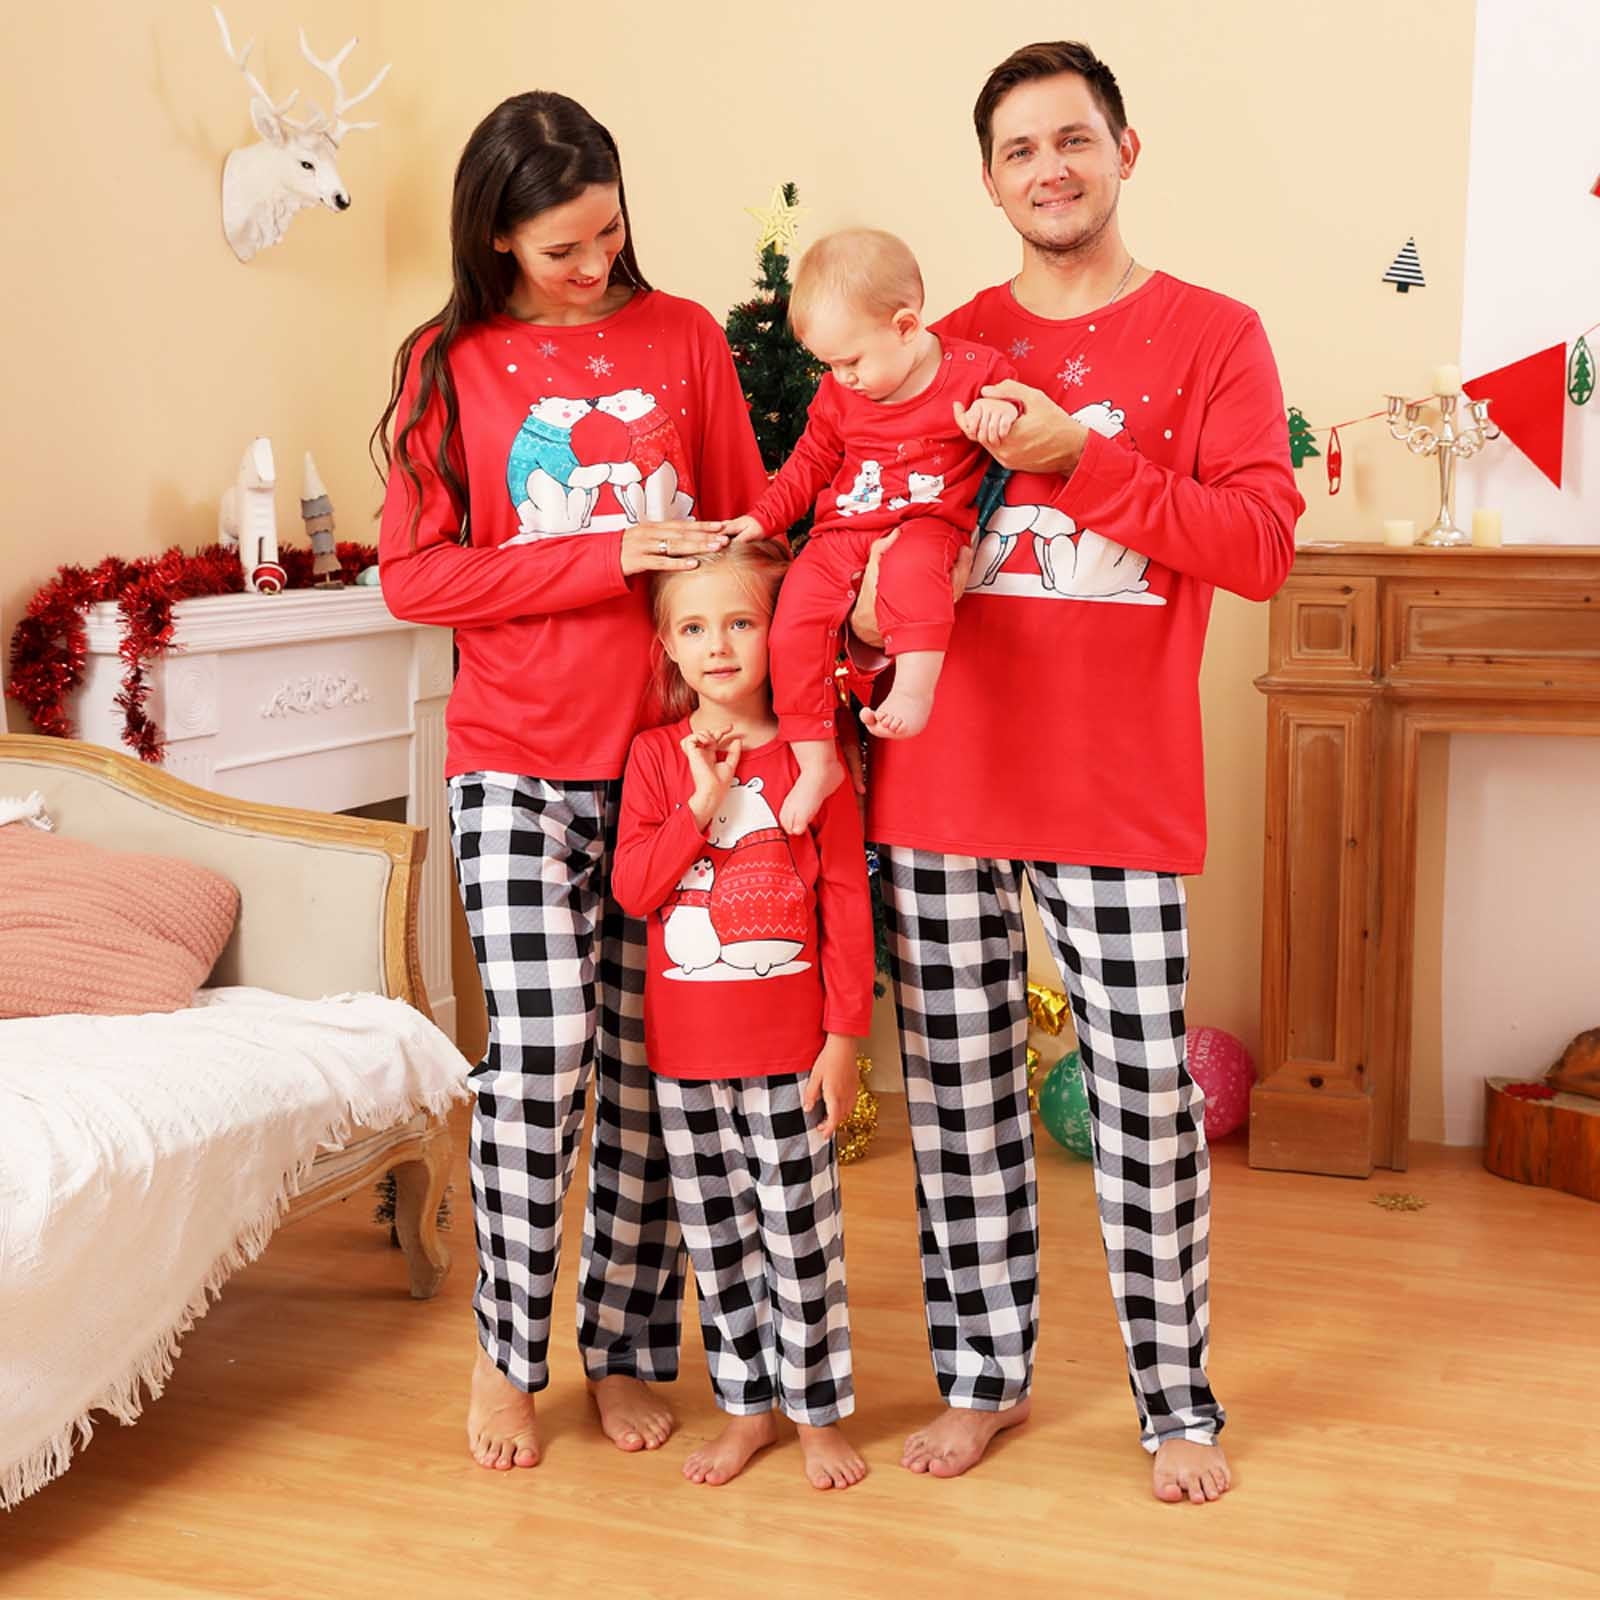 Best Matching Family Christmas Pajamas